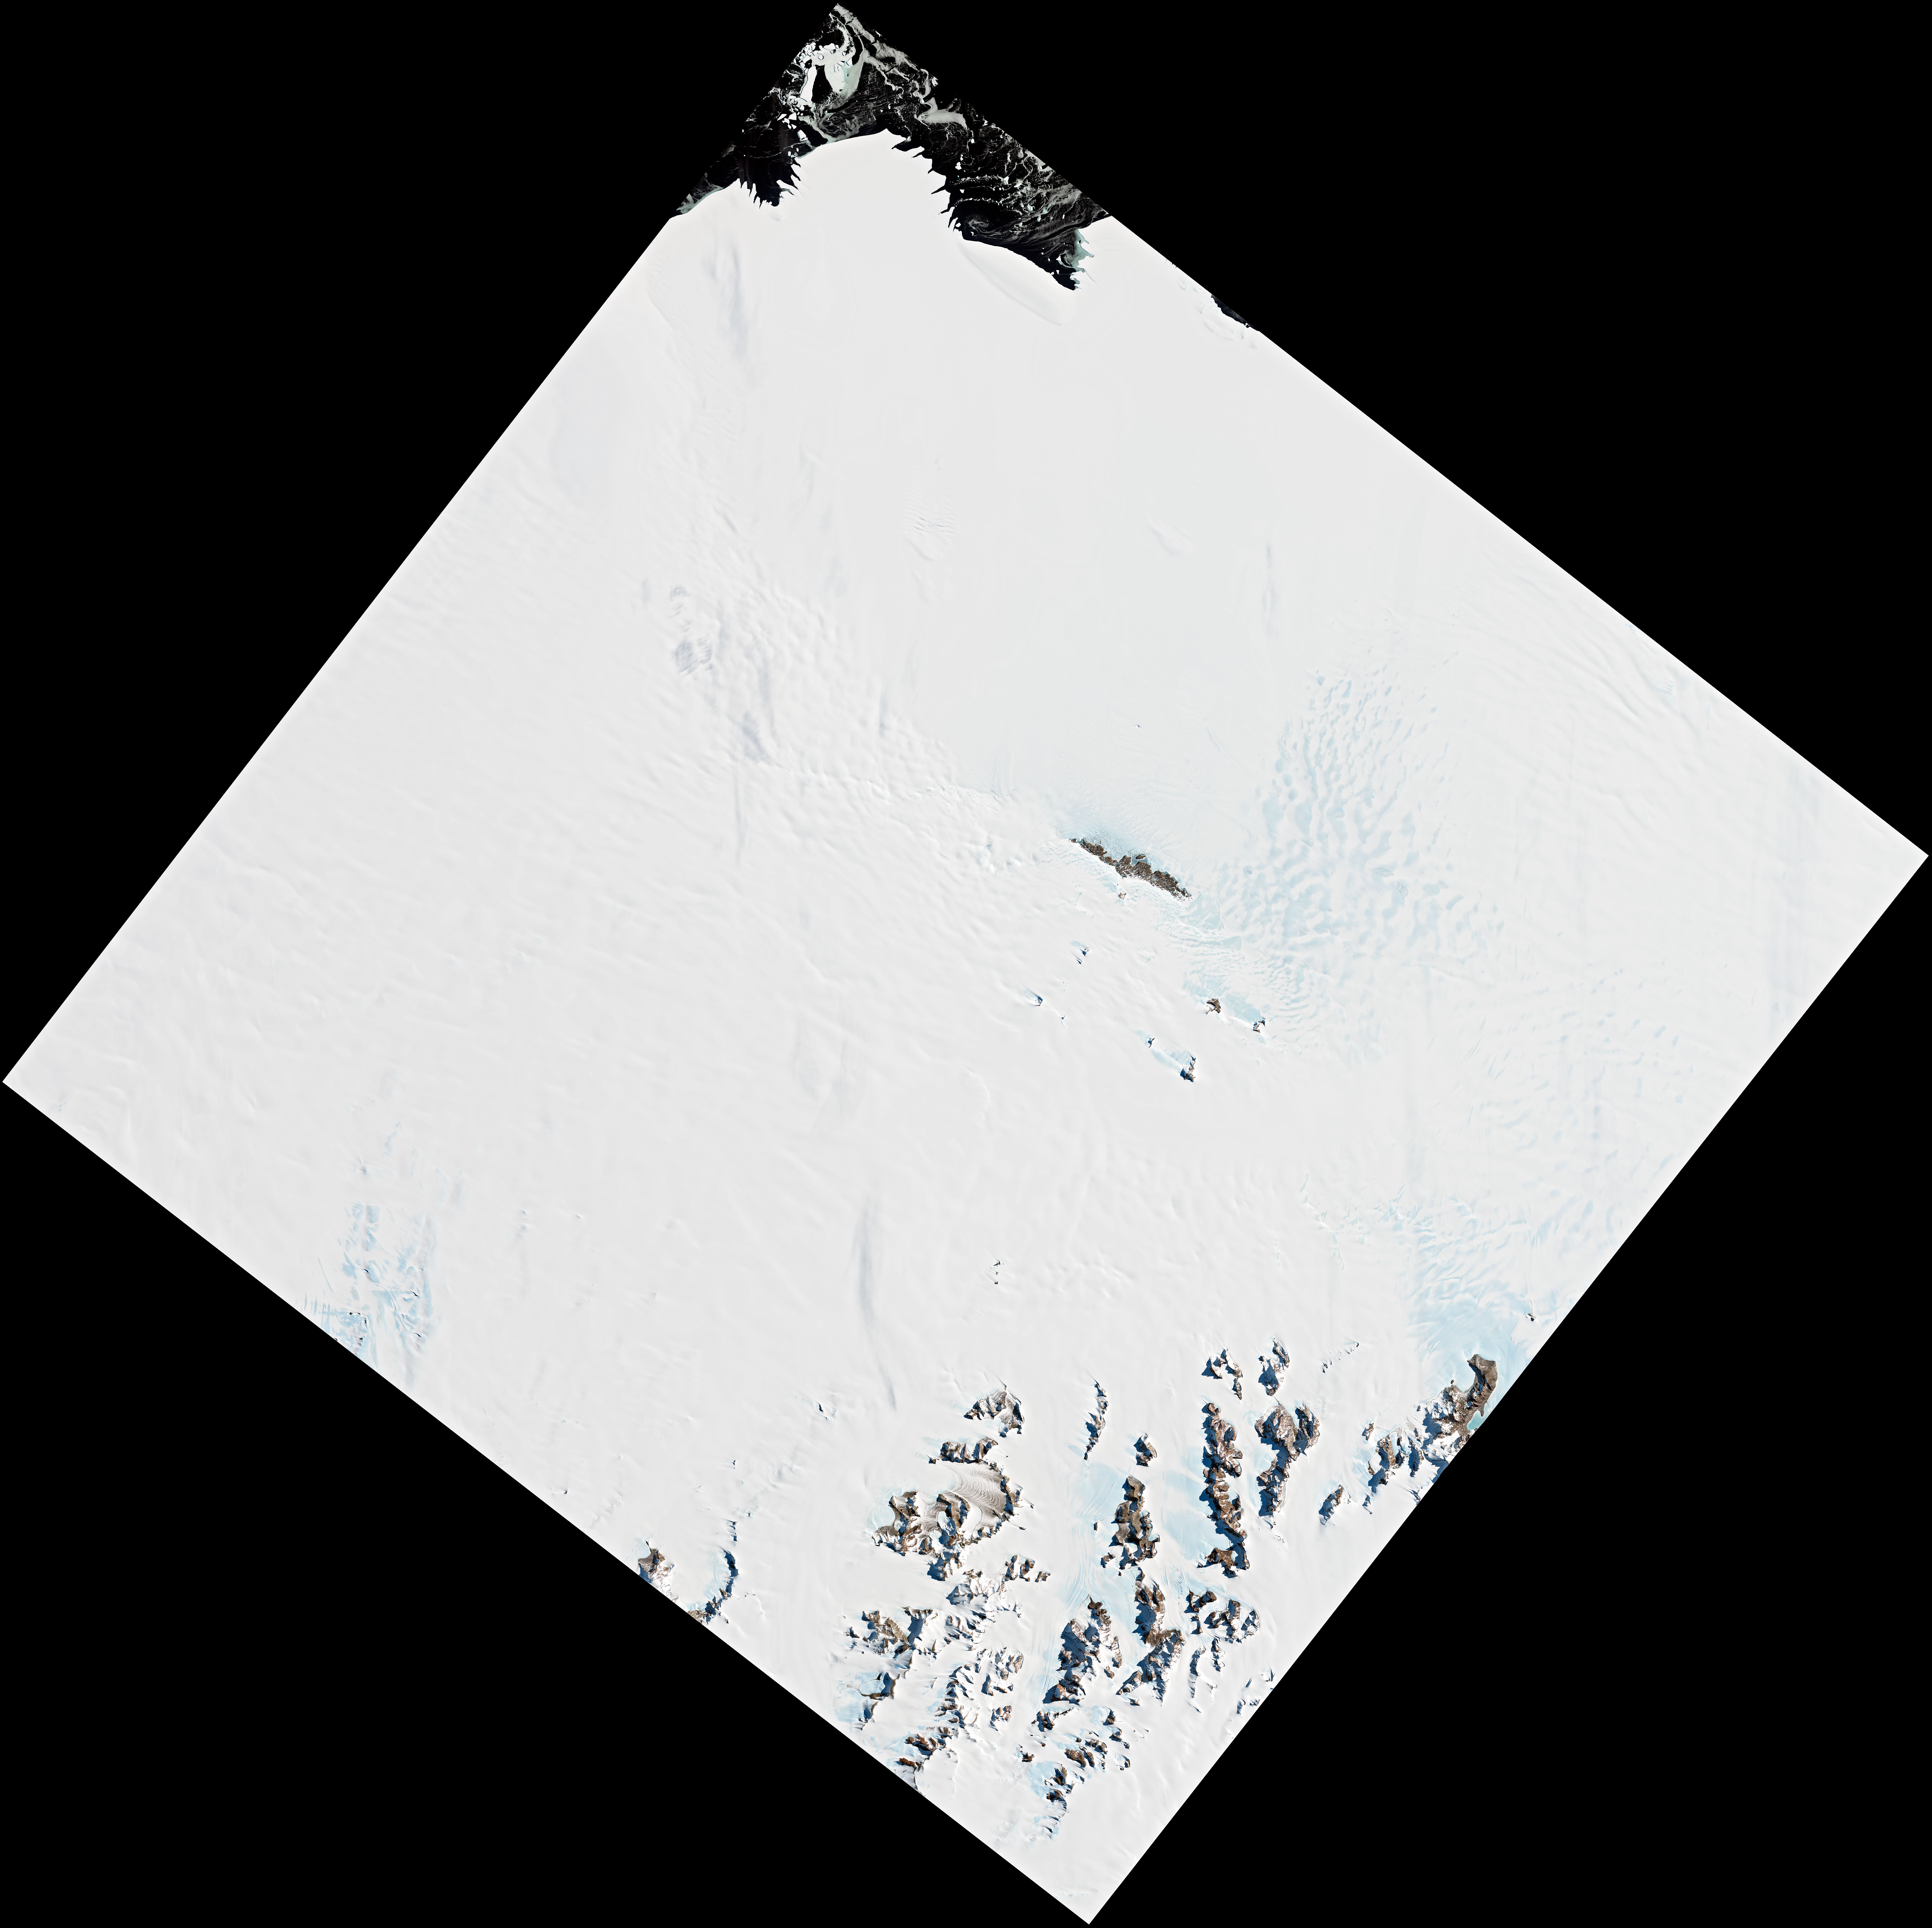 Finding Meteorite Hotspots in Antarctica - related image preview